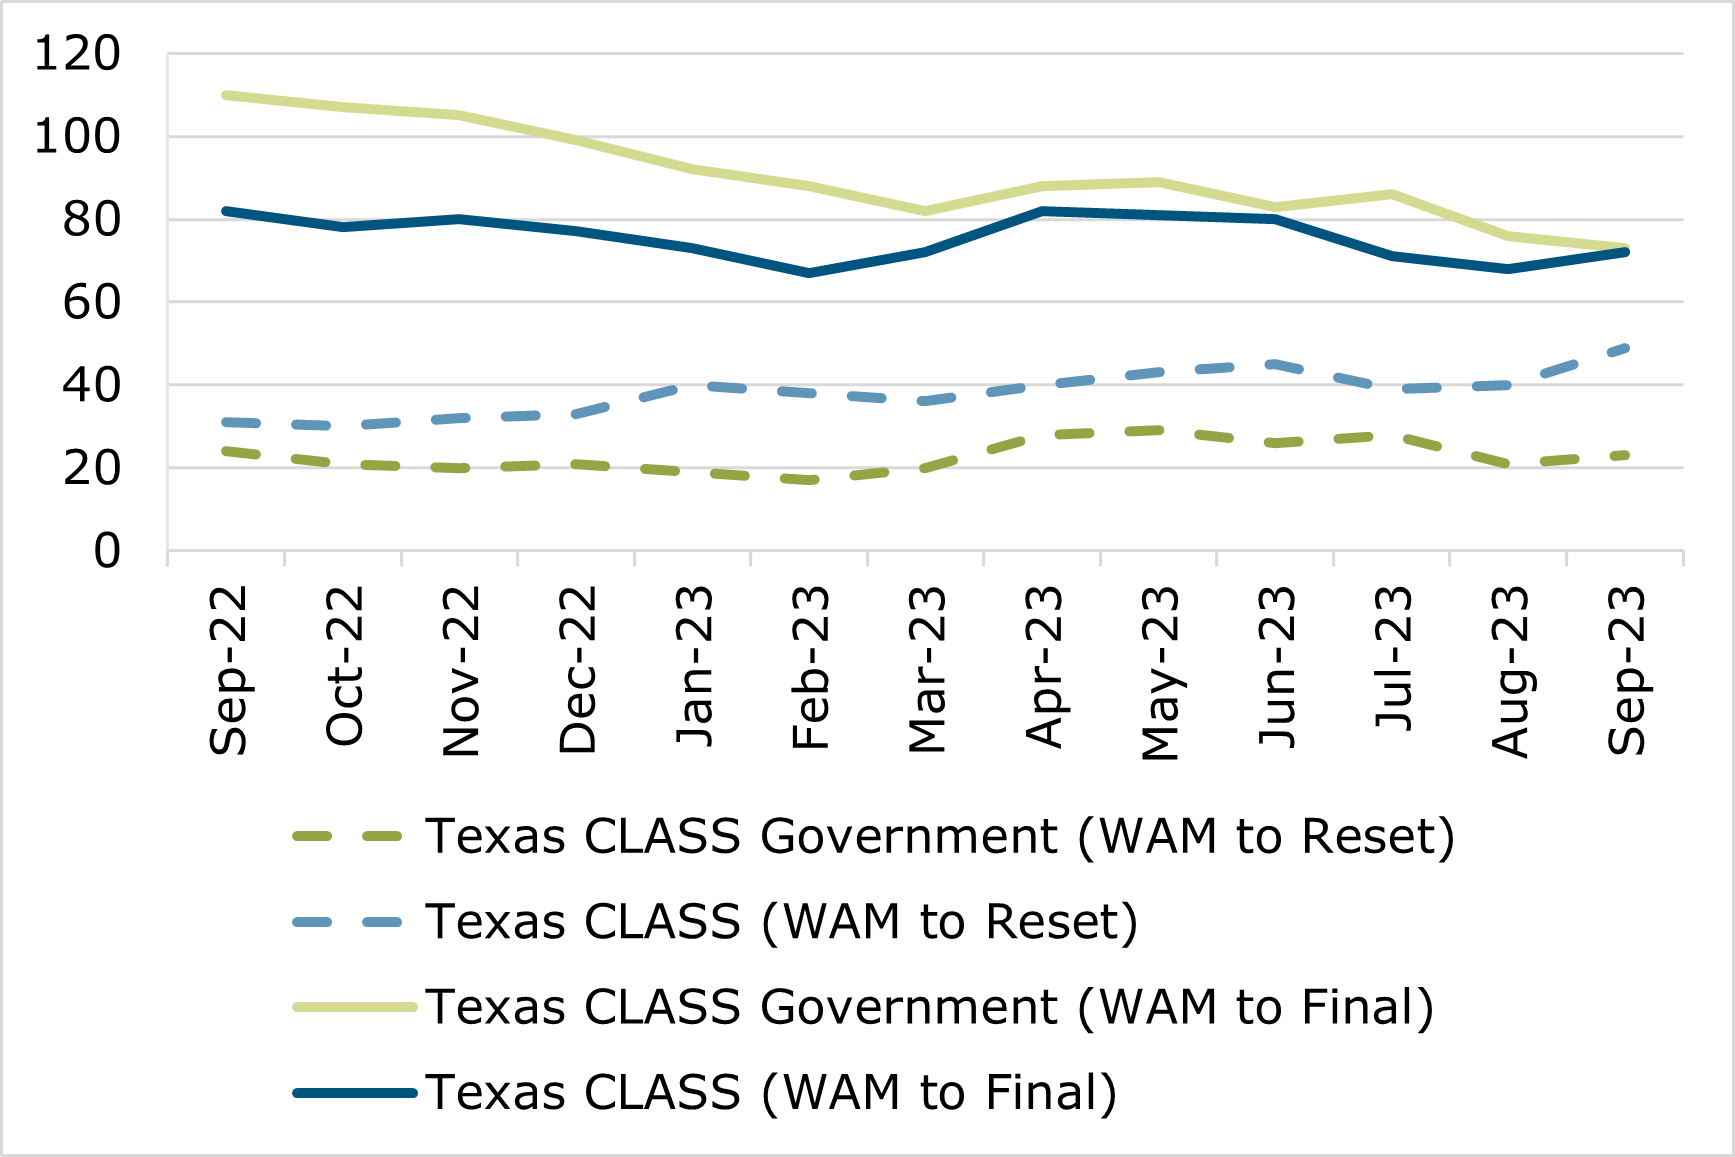 09.23 - Texas CLASS WAM Comparison